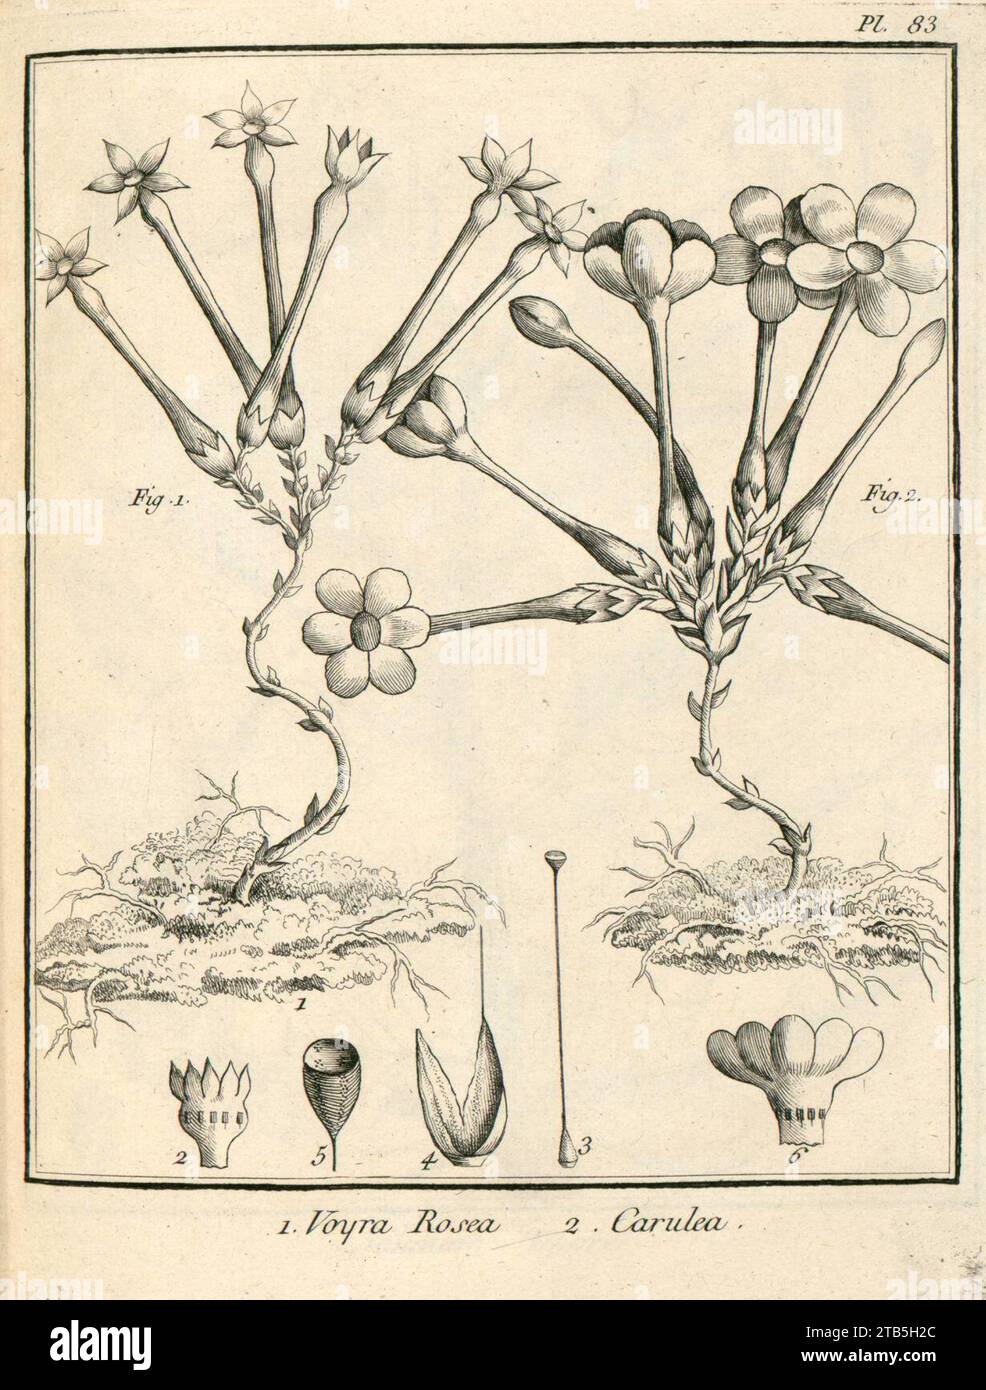 Voyria 1. rosea 2. caerulea Aublet 1775 pl 83. Stock Photo